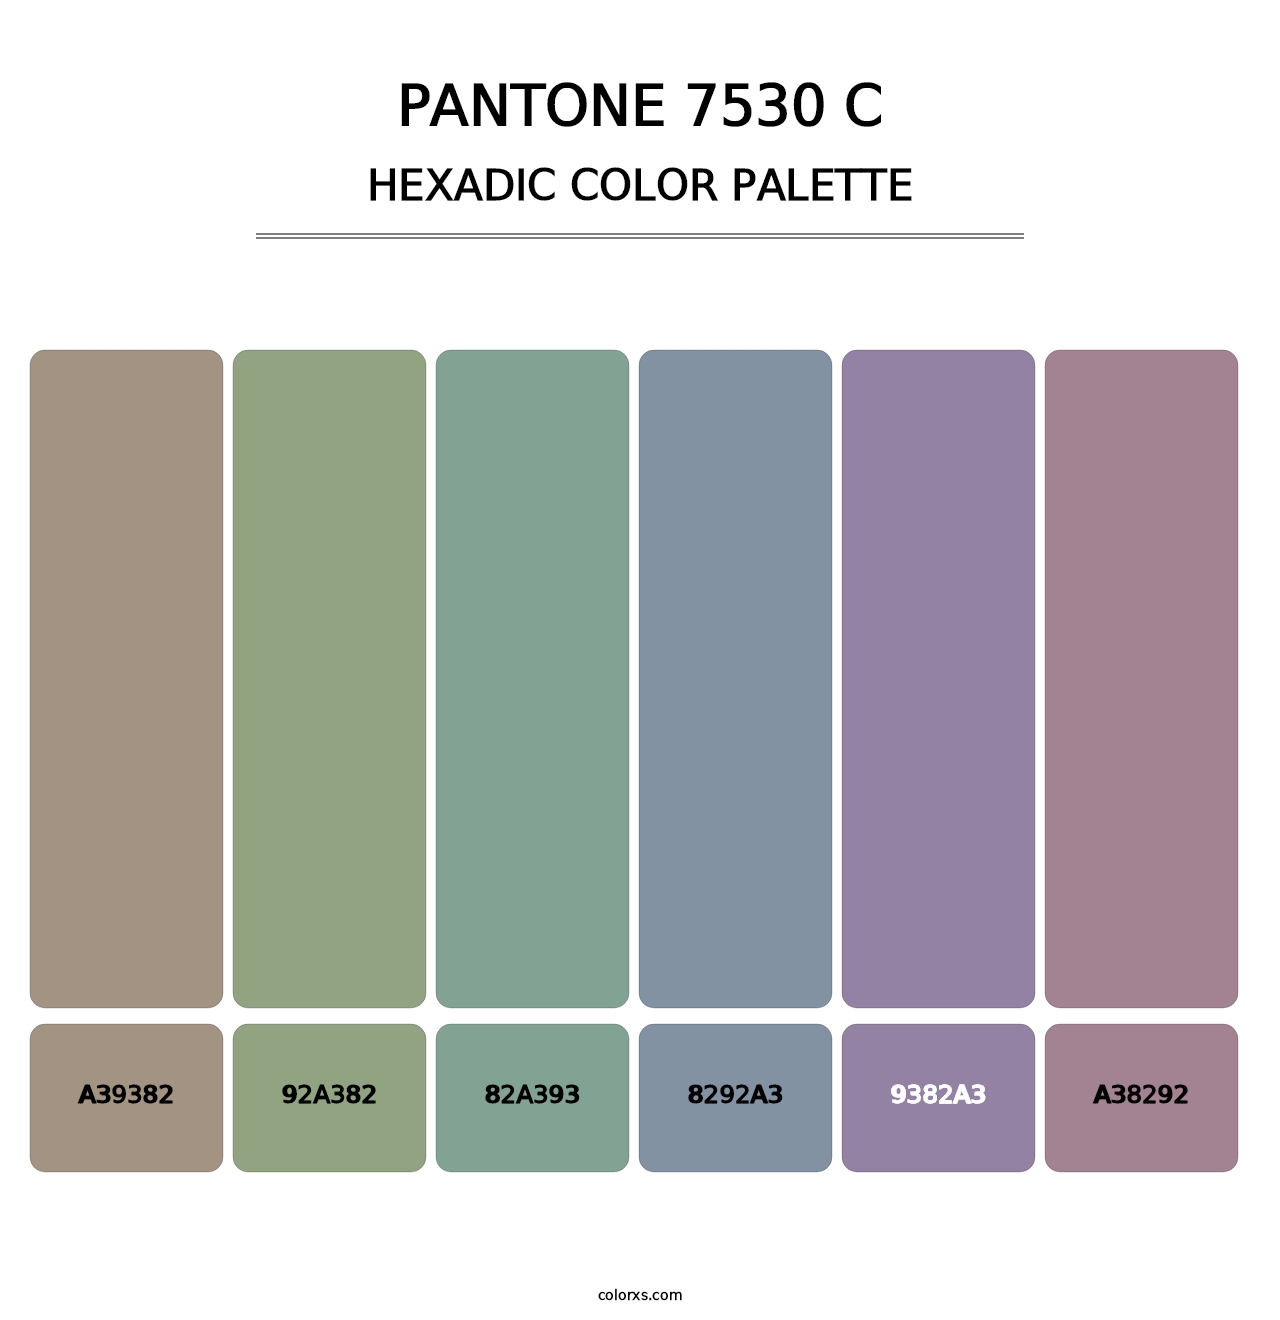 PANTONE 7530 C - Hexadic Color Palette